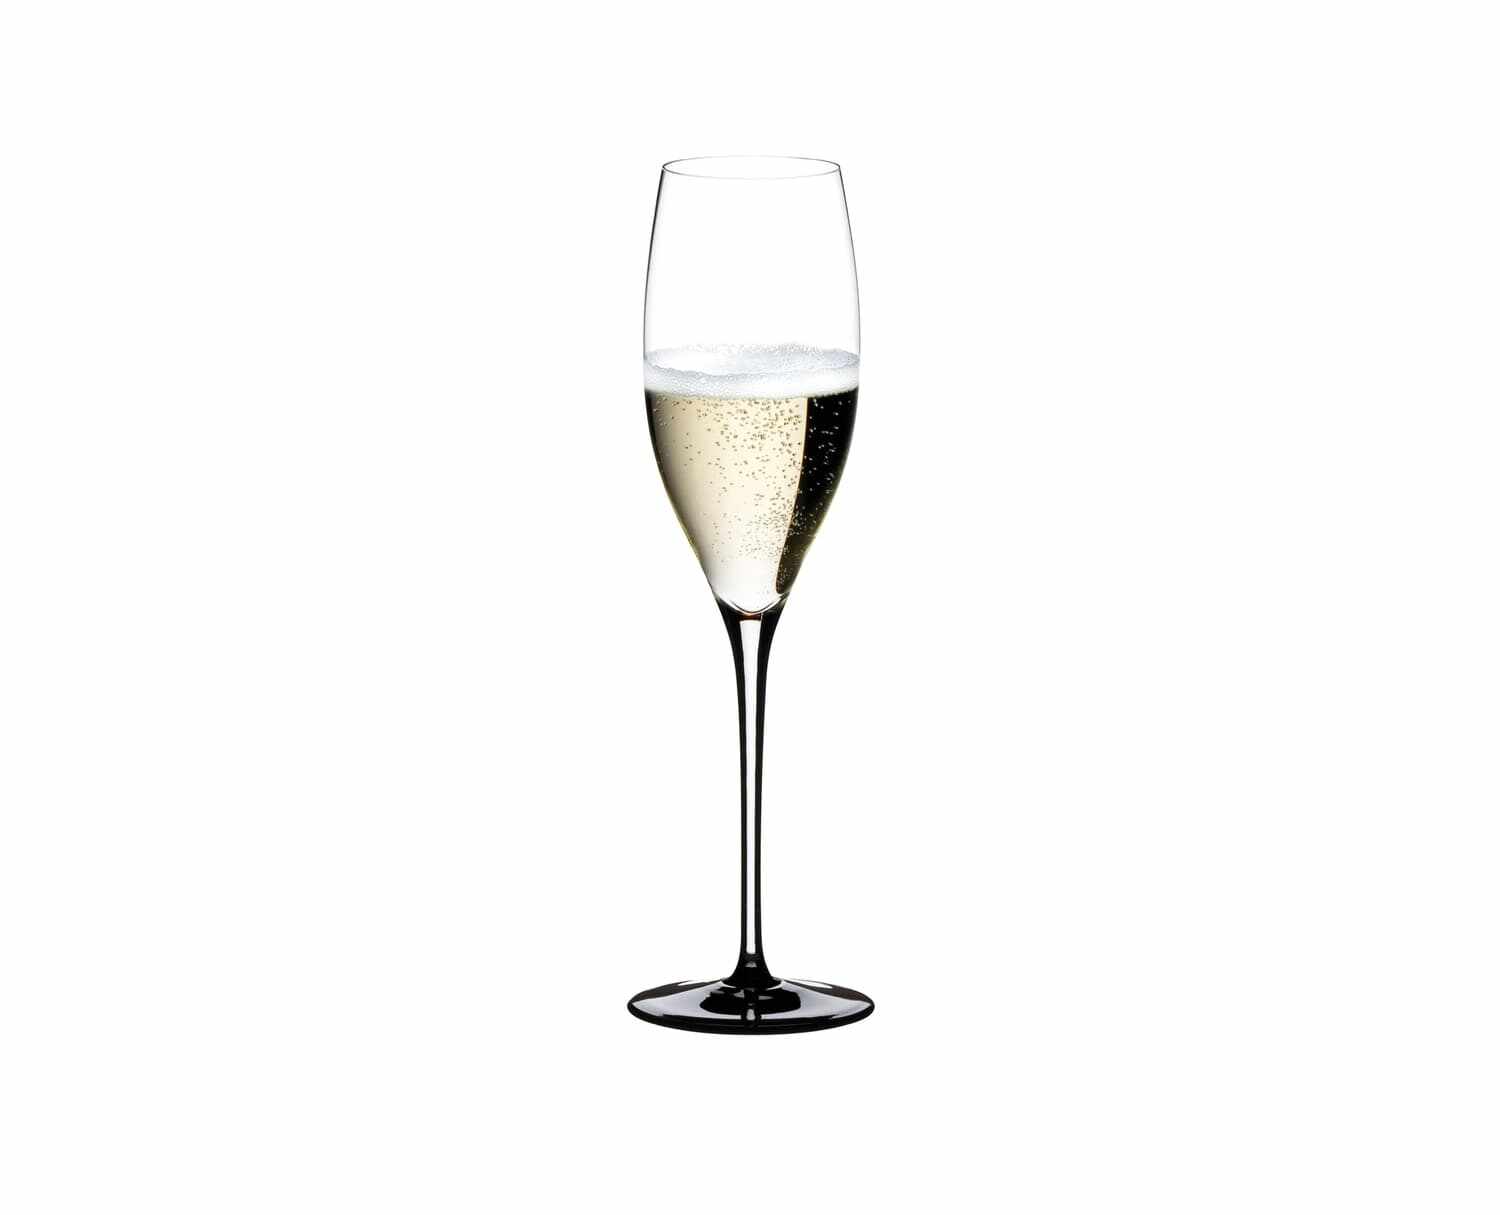 Pahar pentru sampanie si vin spumant, din cristal Sommeliers Black Tie Vintage Champagne Negru, 330 ml, Riedel